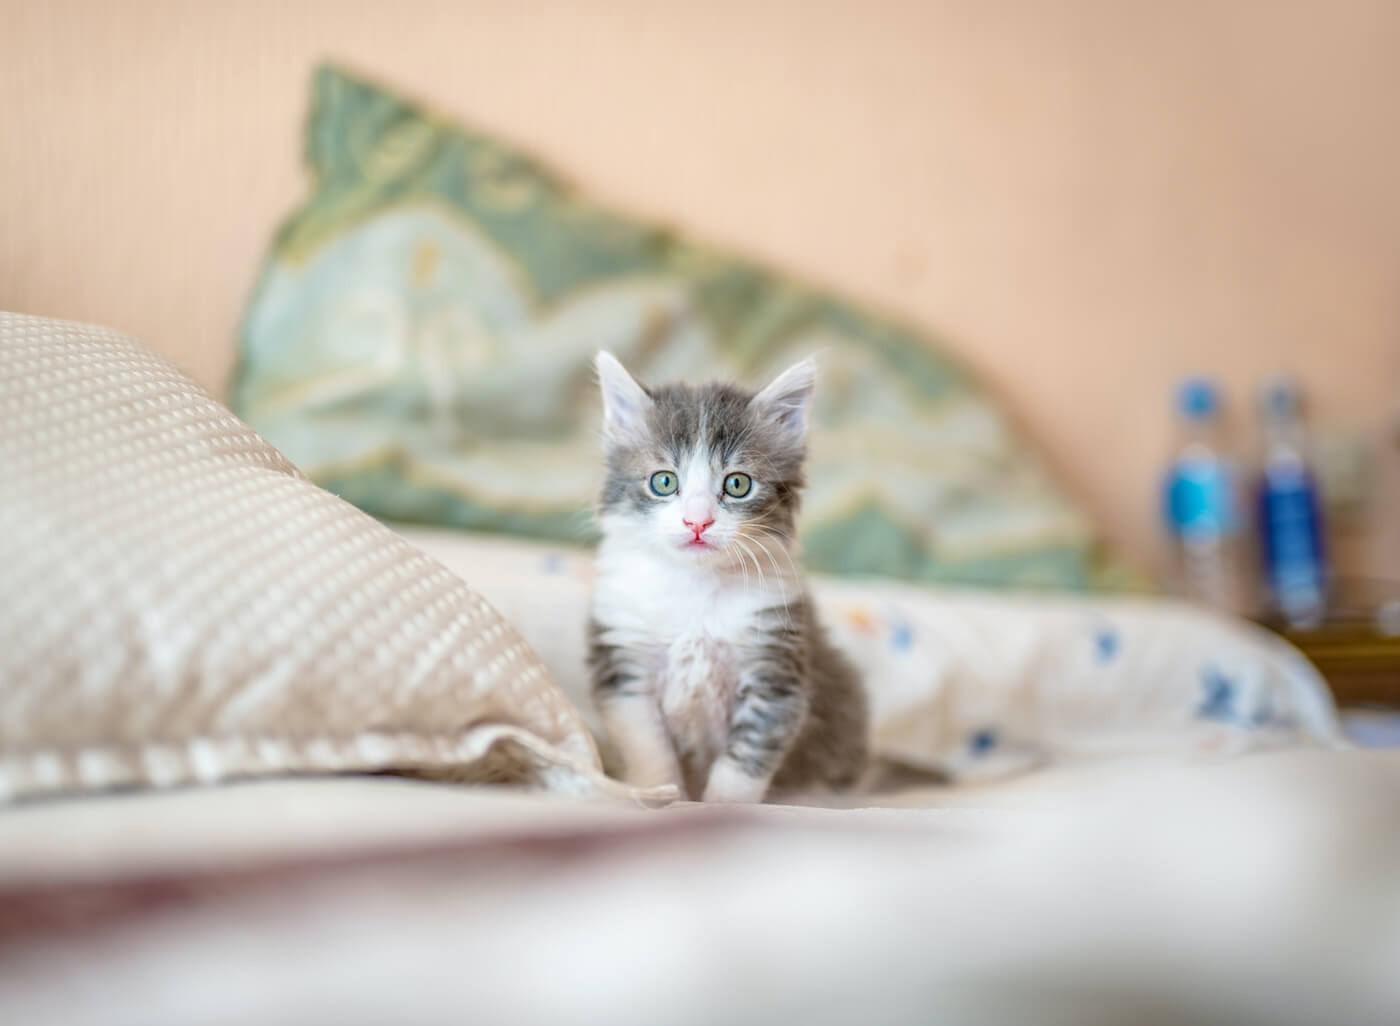 photos of pets on bed kitten